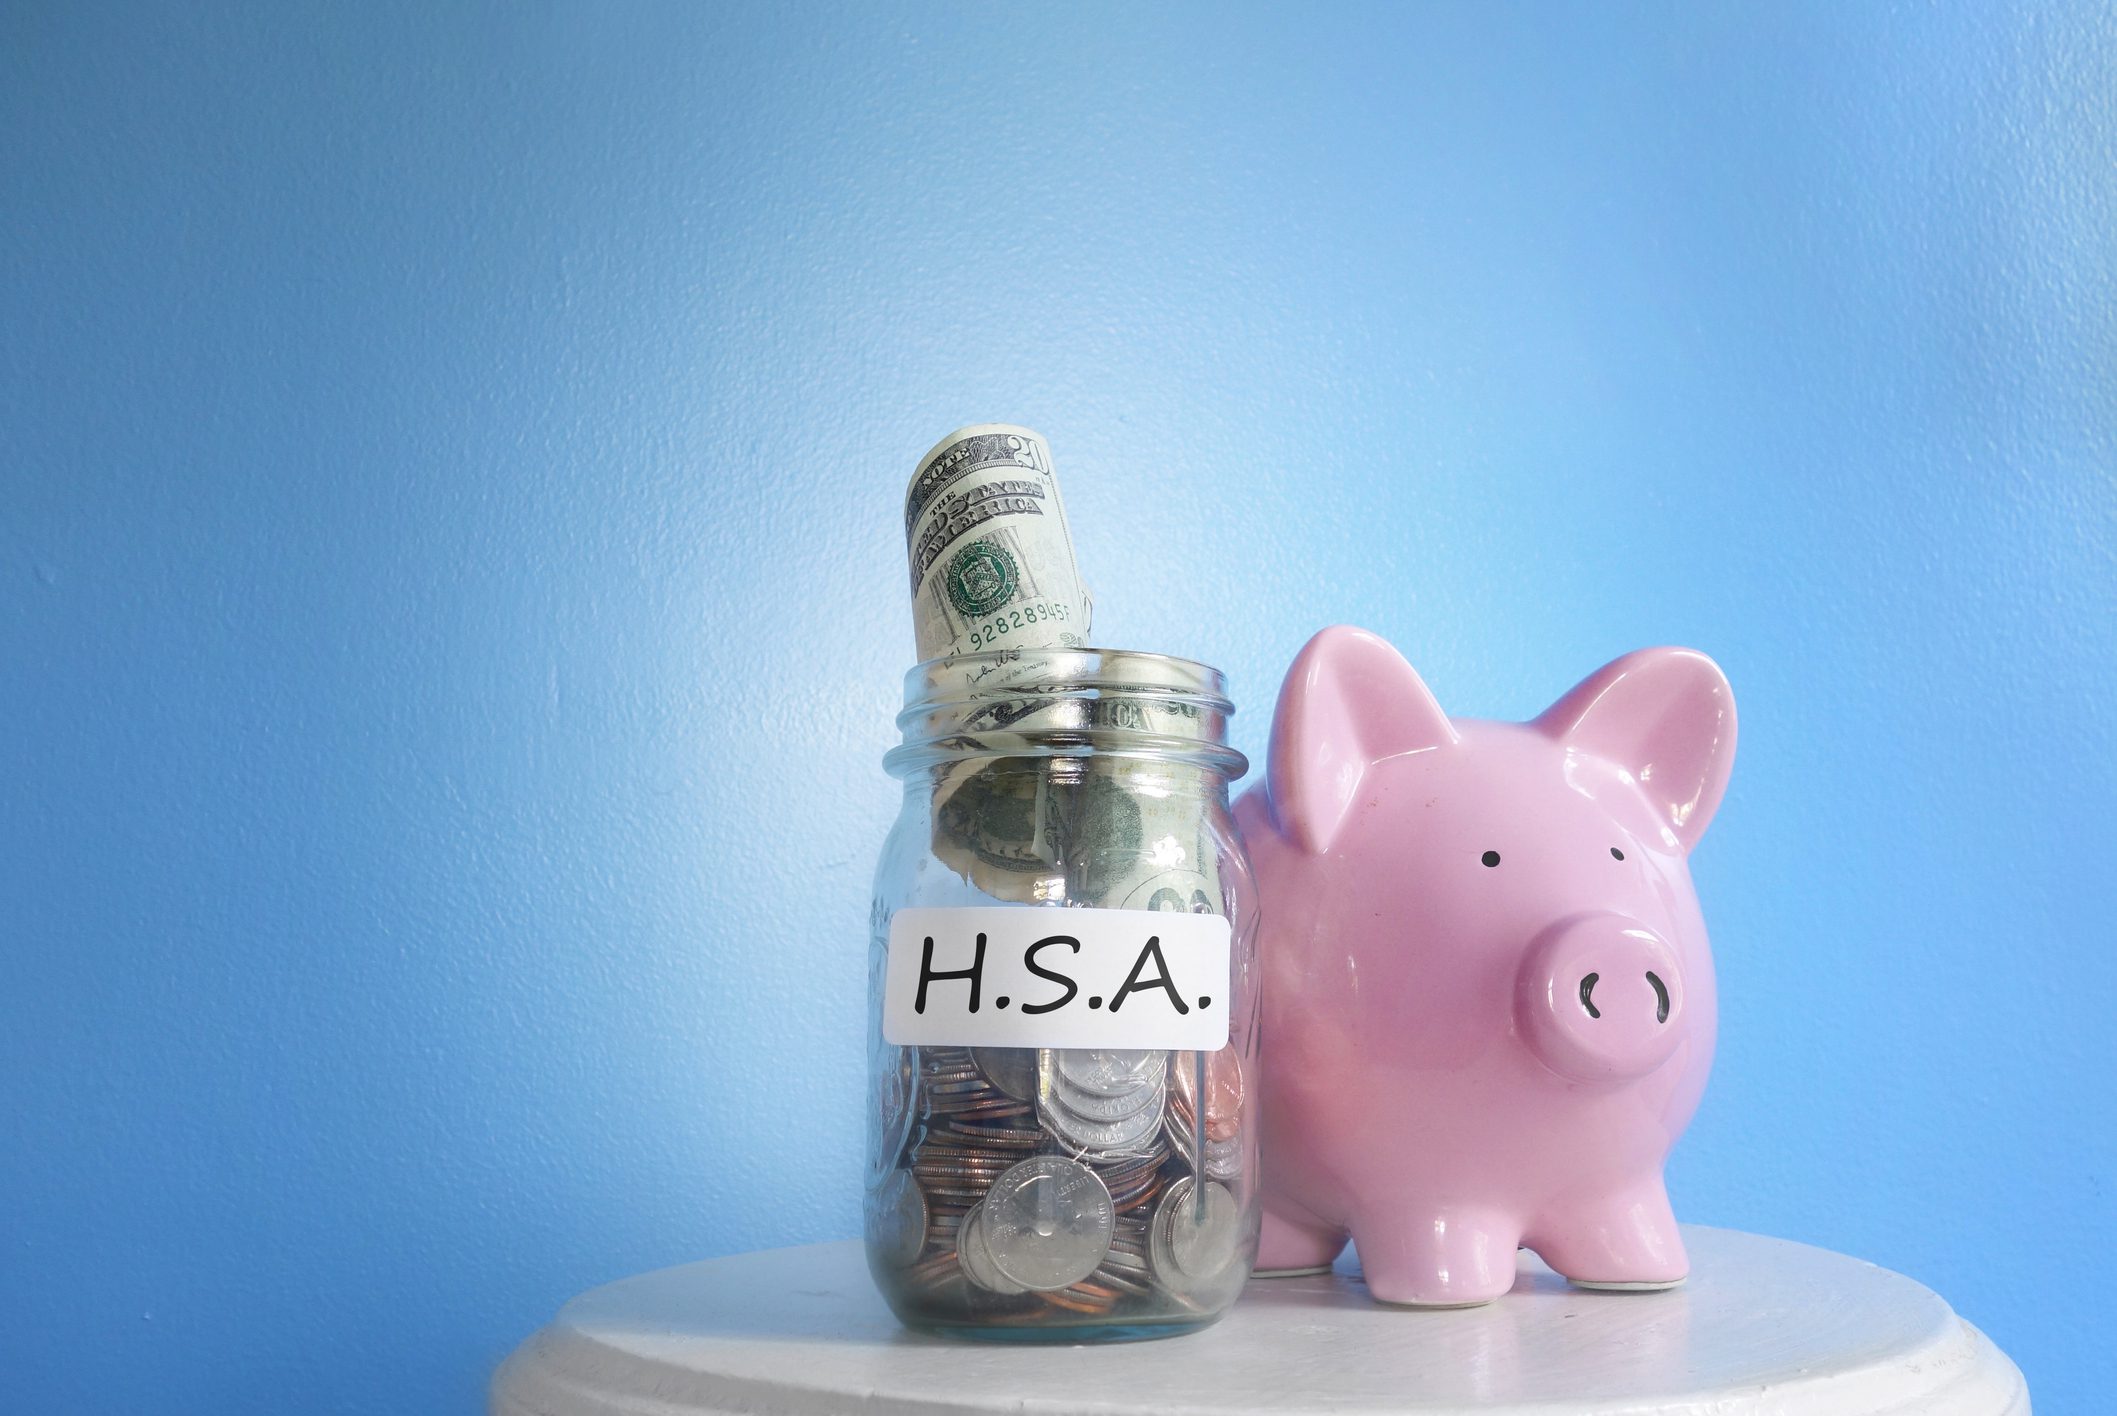 Health Savings Account ( HSA ) coin jar with piggy bank